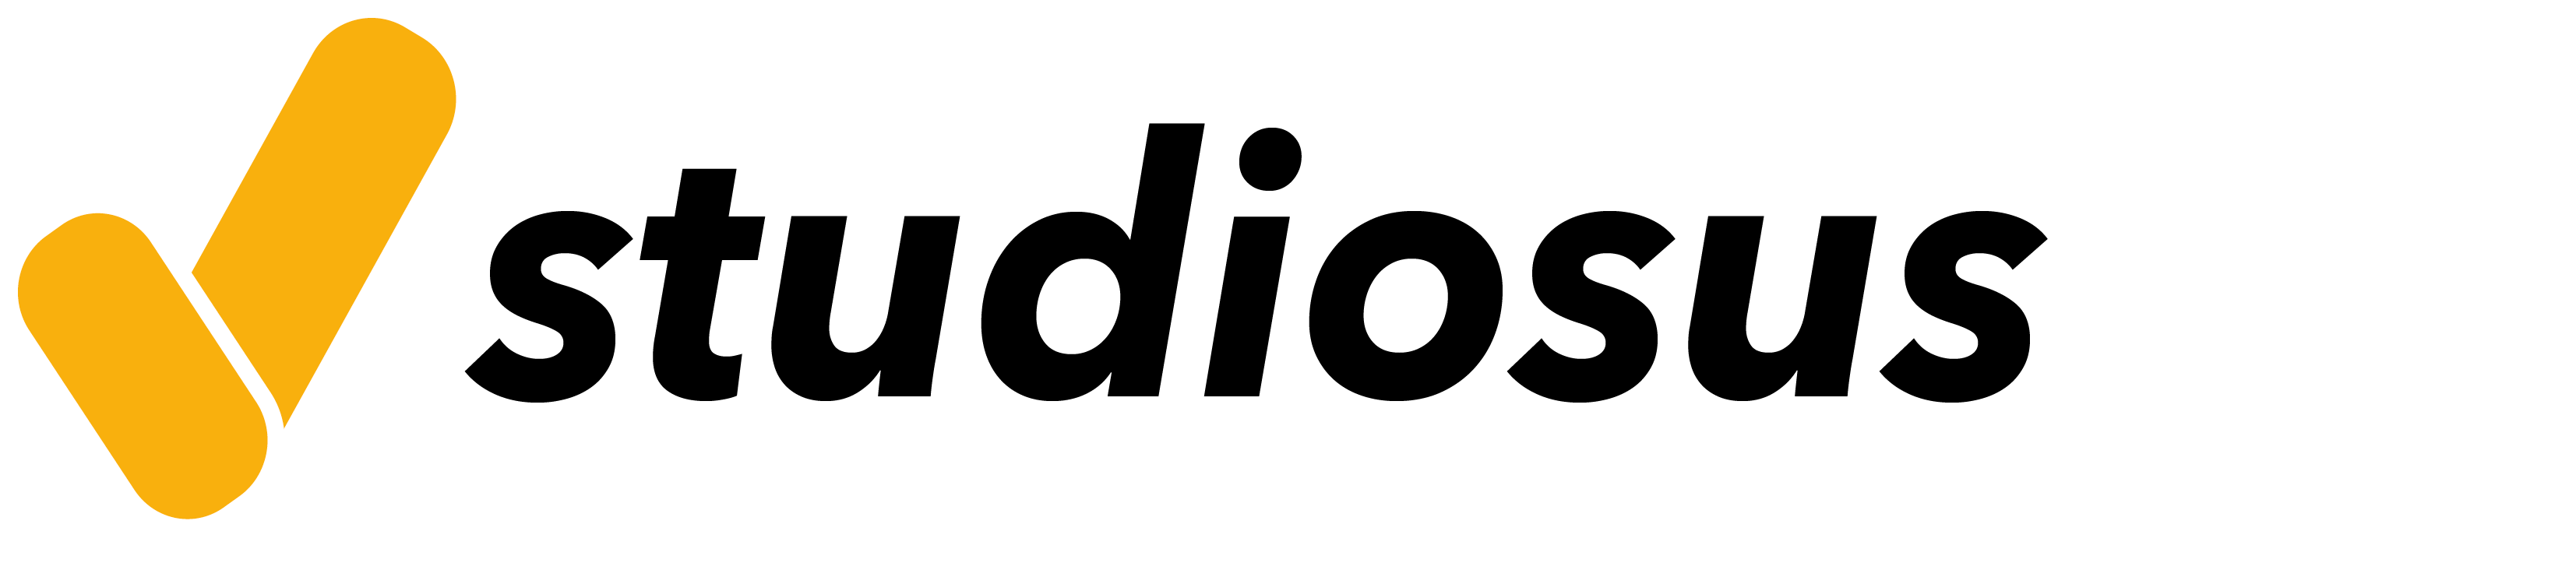 Studiosus logo